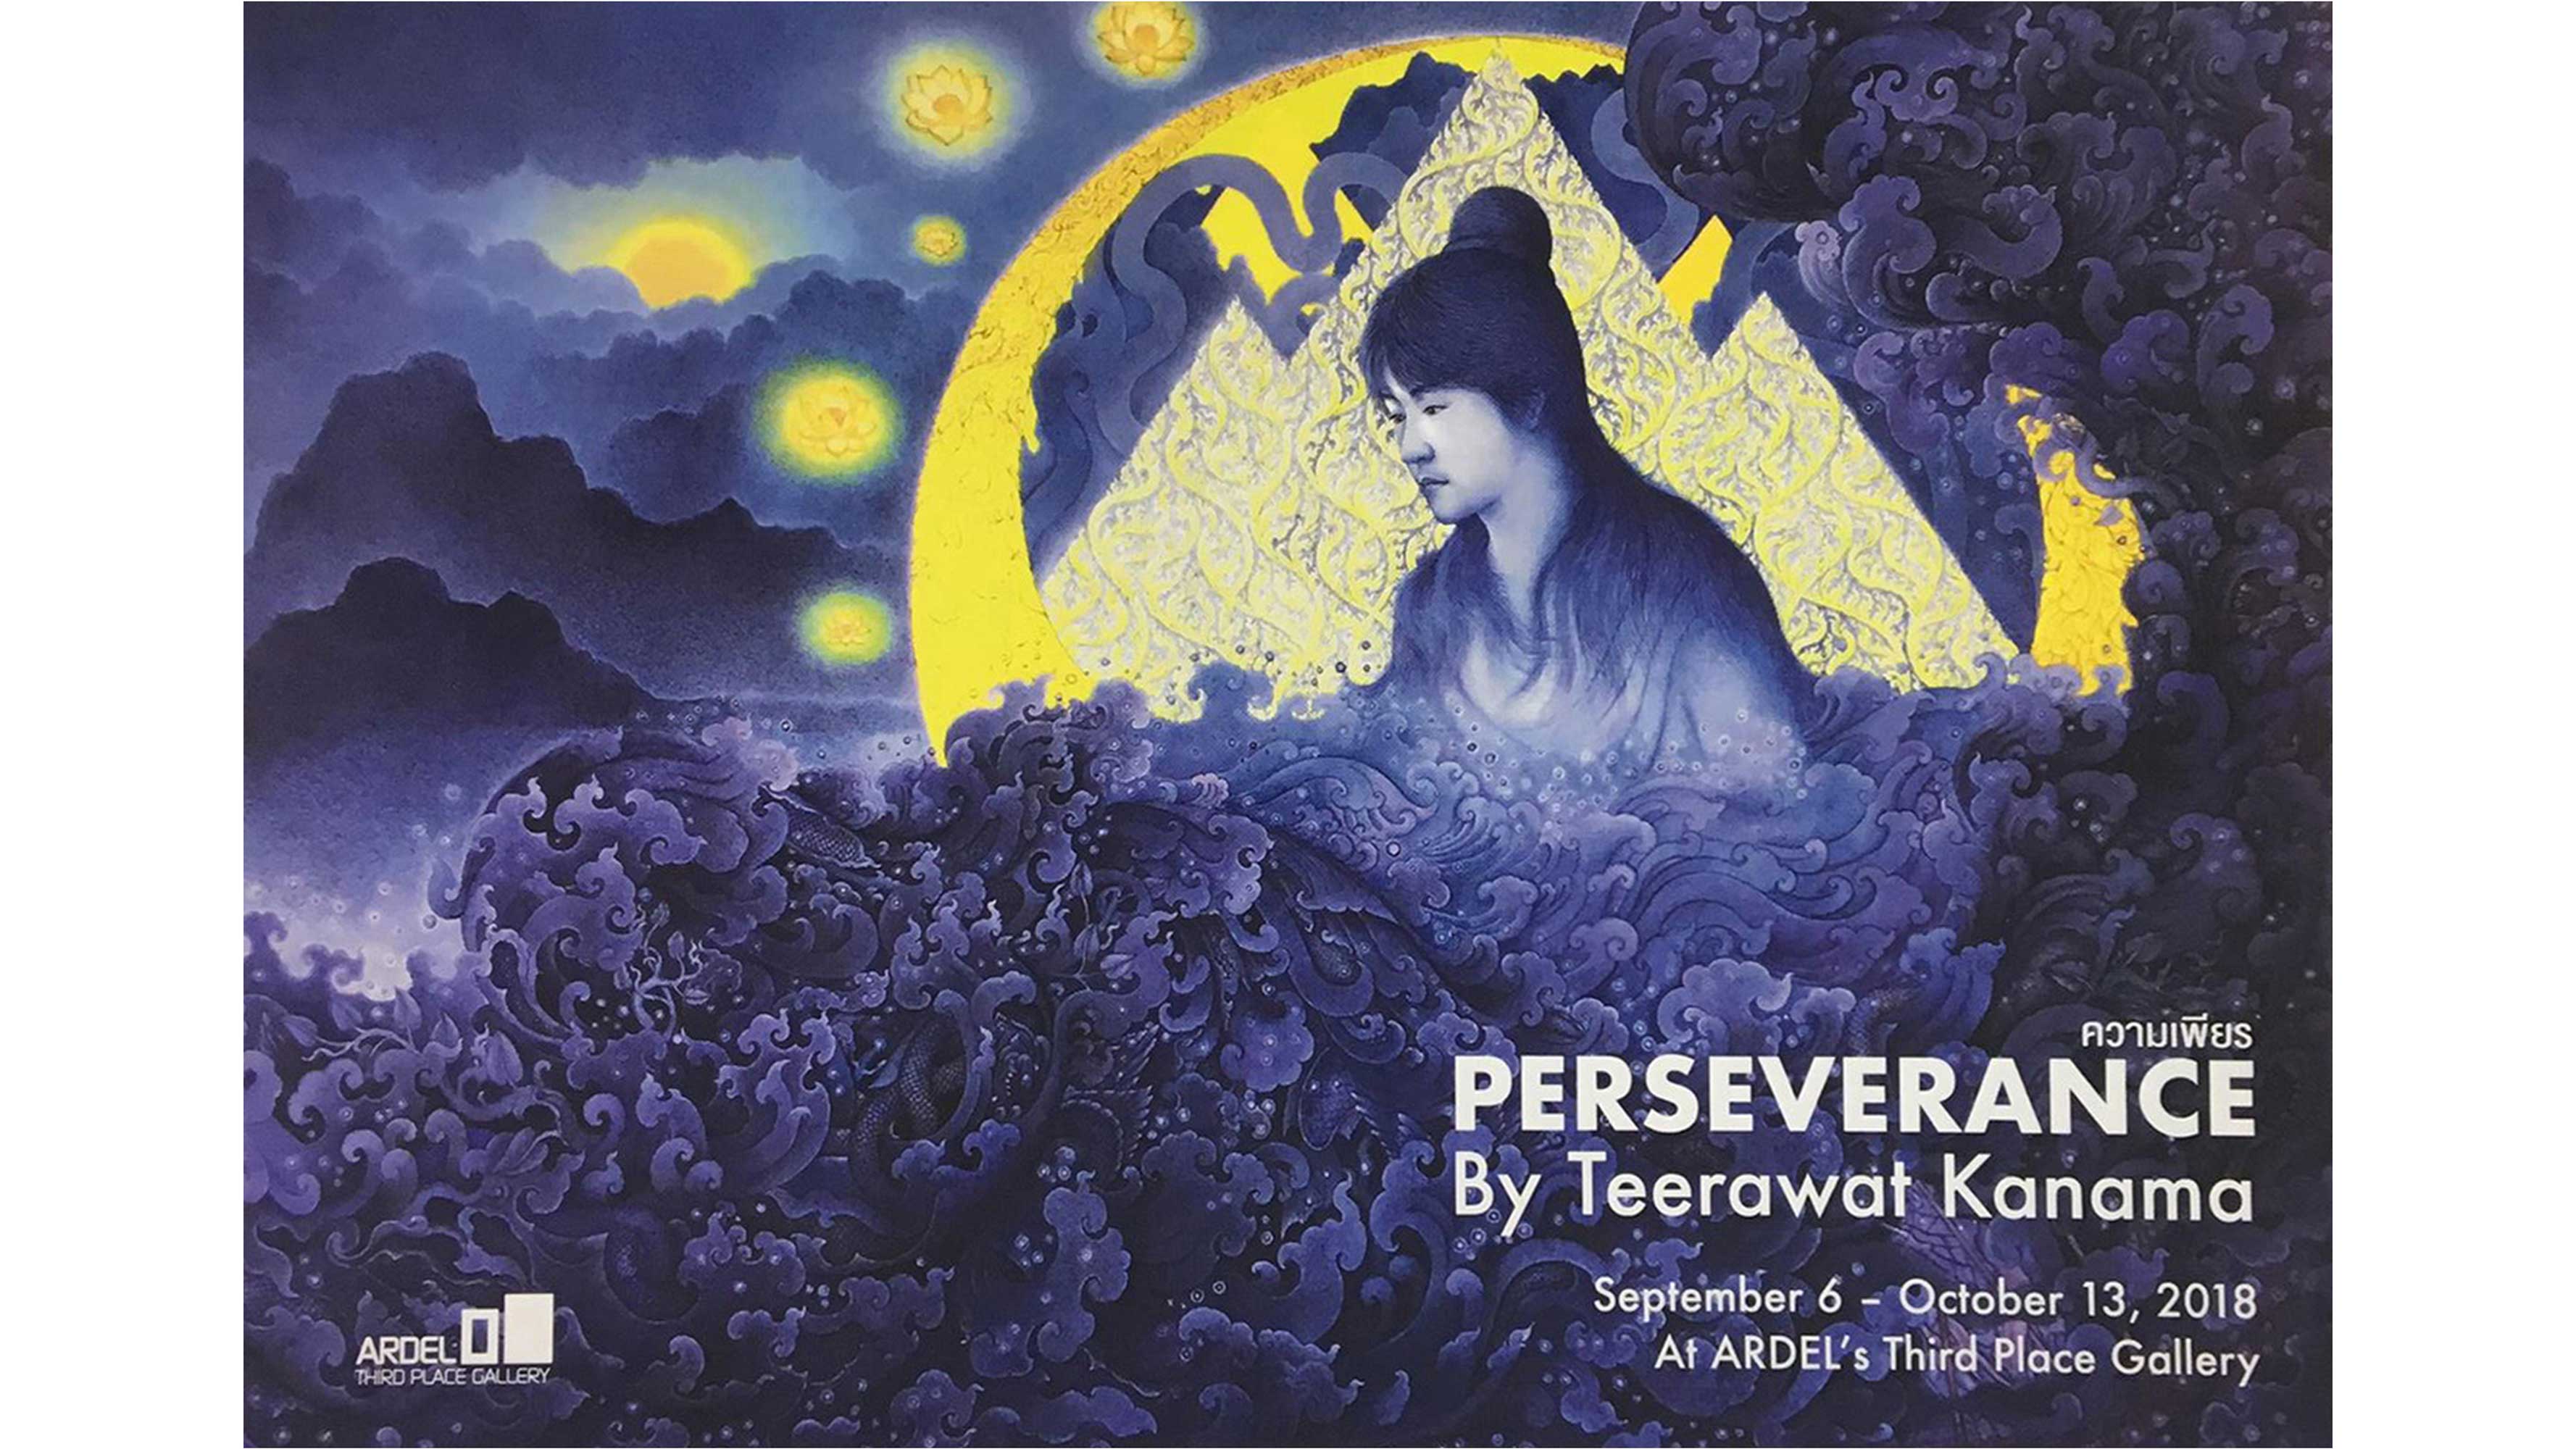 Exhibition Perseverance By Teerawat Kanama | นิทรรศการ ความเพียร โดย ธีระวัฒน์ คะนะมะ